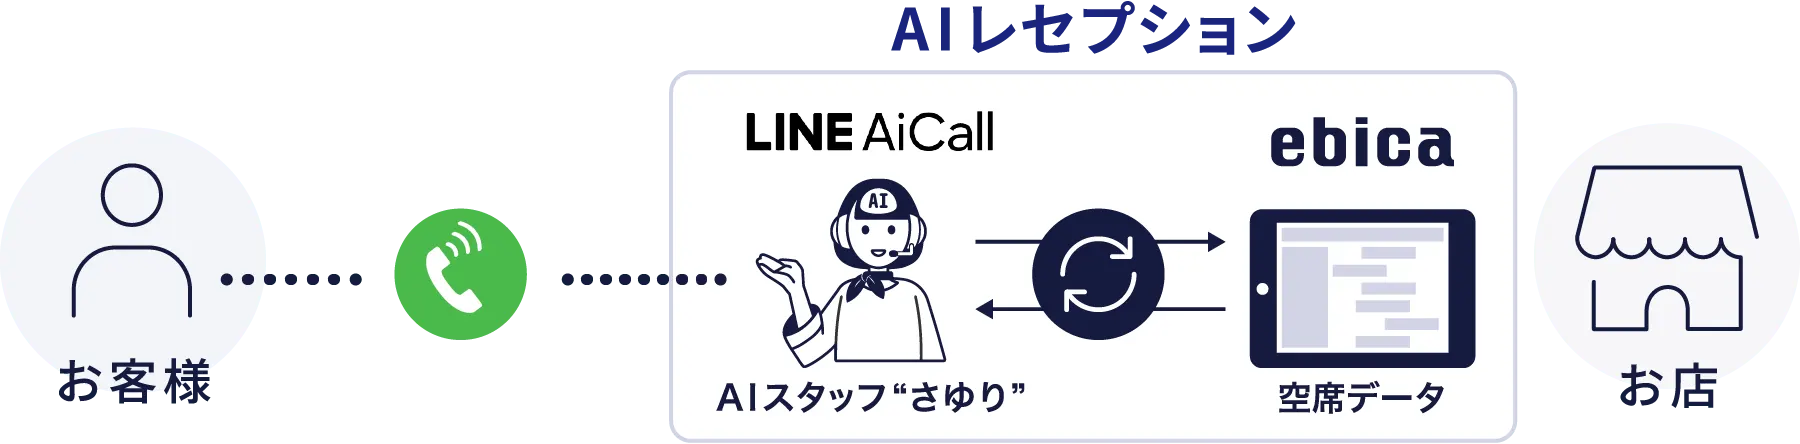 LINE AiCallと連携。ヒトと会話しているような自然な音声で予約電話に応答します。